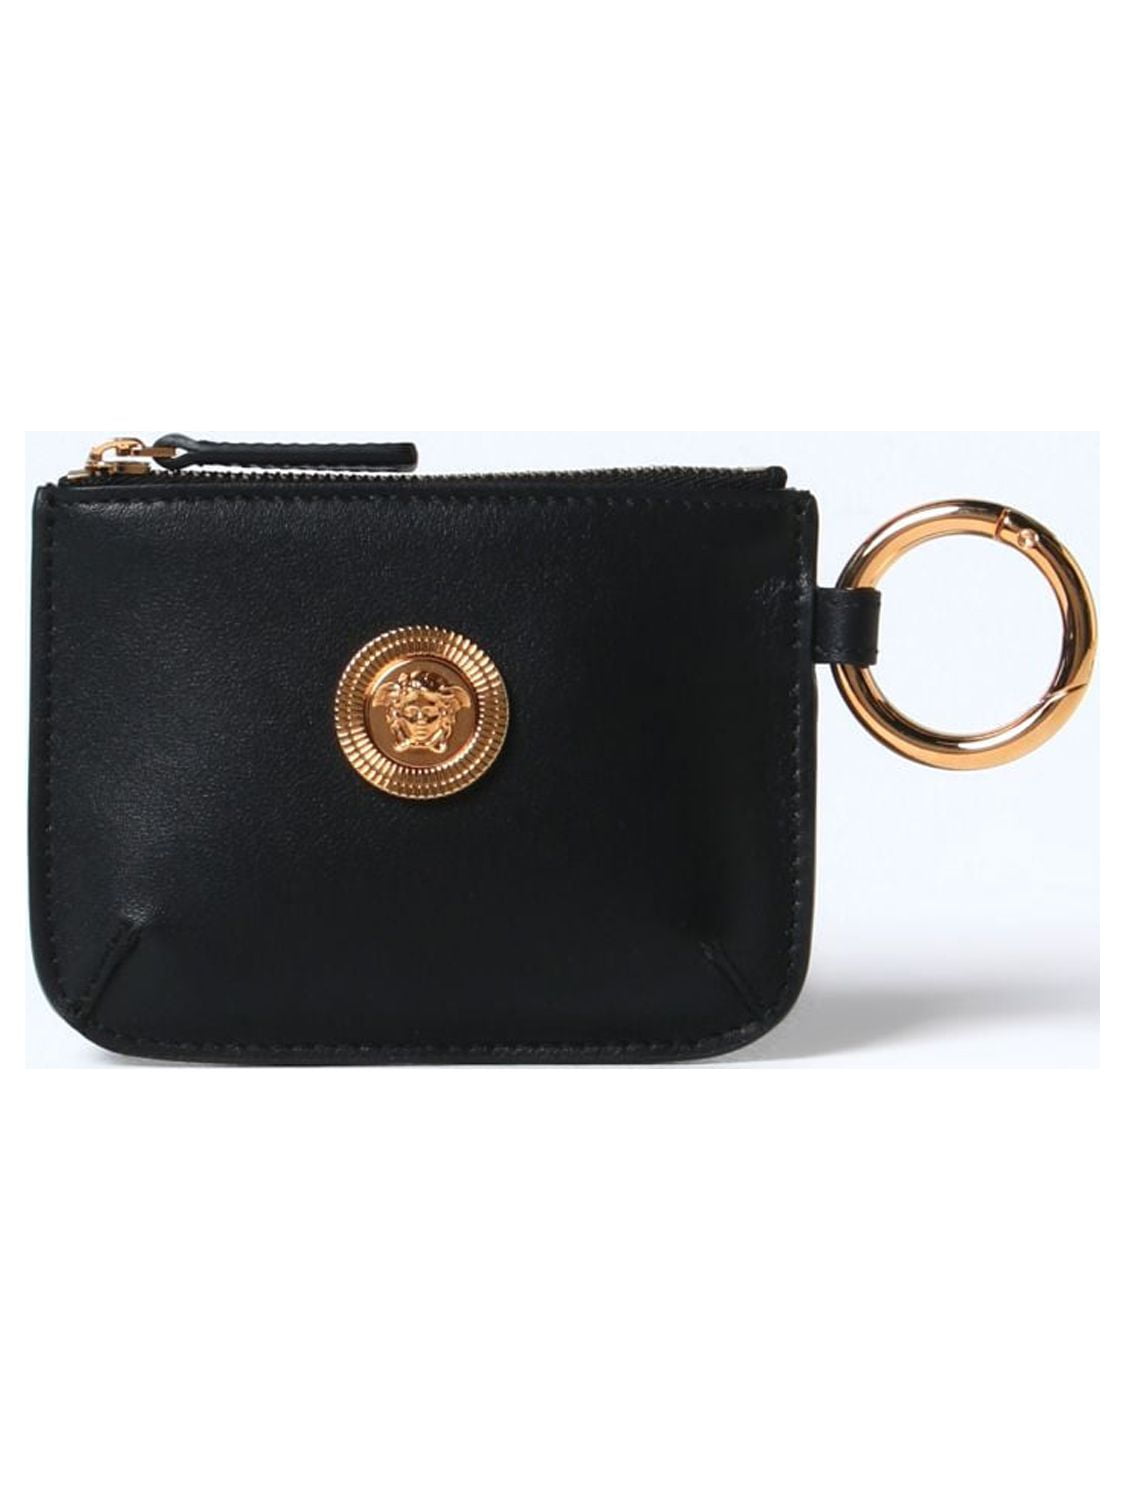 VERSACE: wallet in micro grain leather - Black | VERSACE wallet  1004664DVIT2T online at GIGLIO.COM